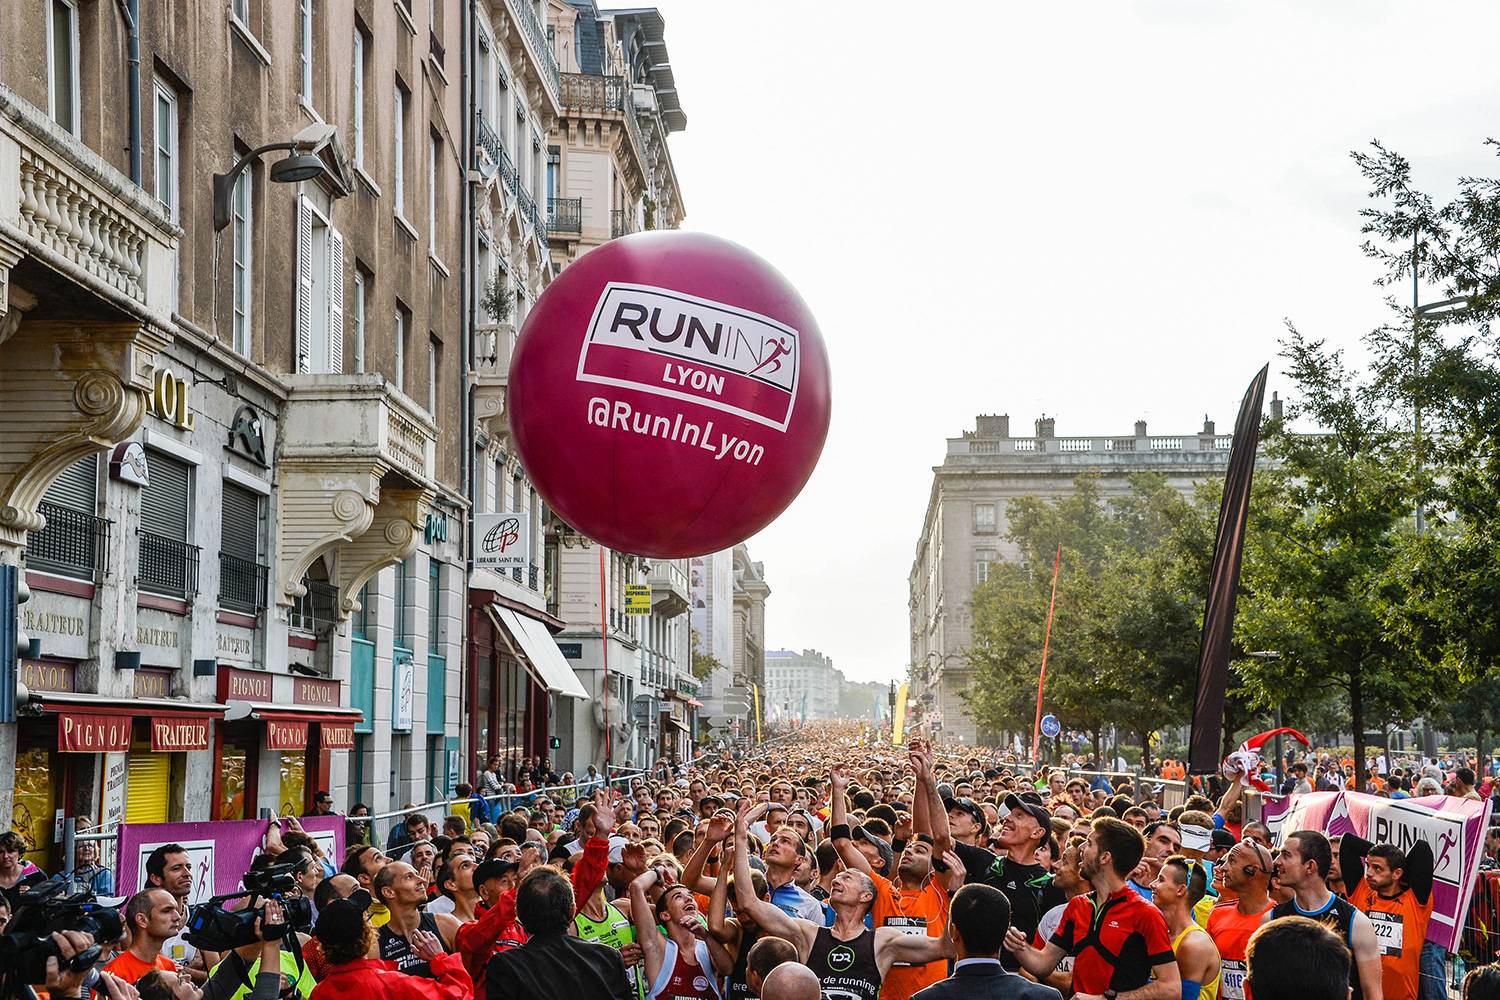 Run in Lyon 2015